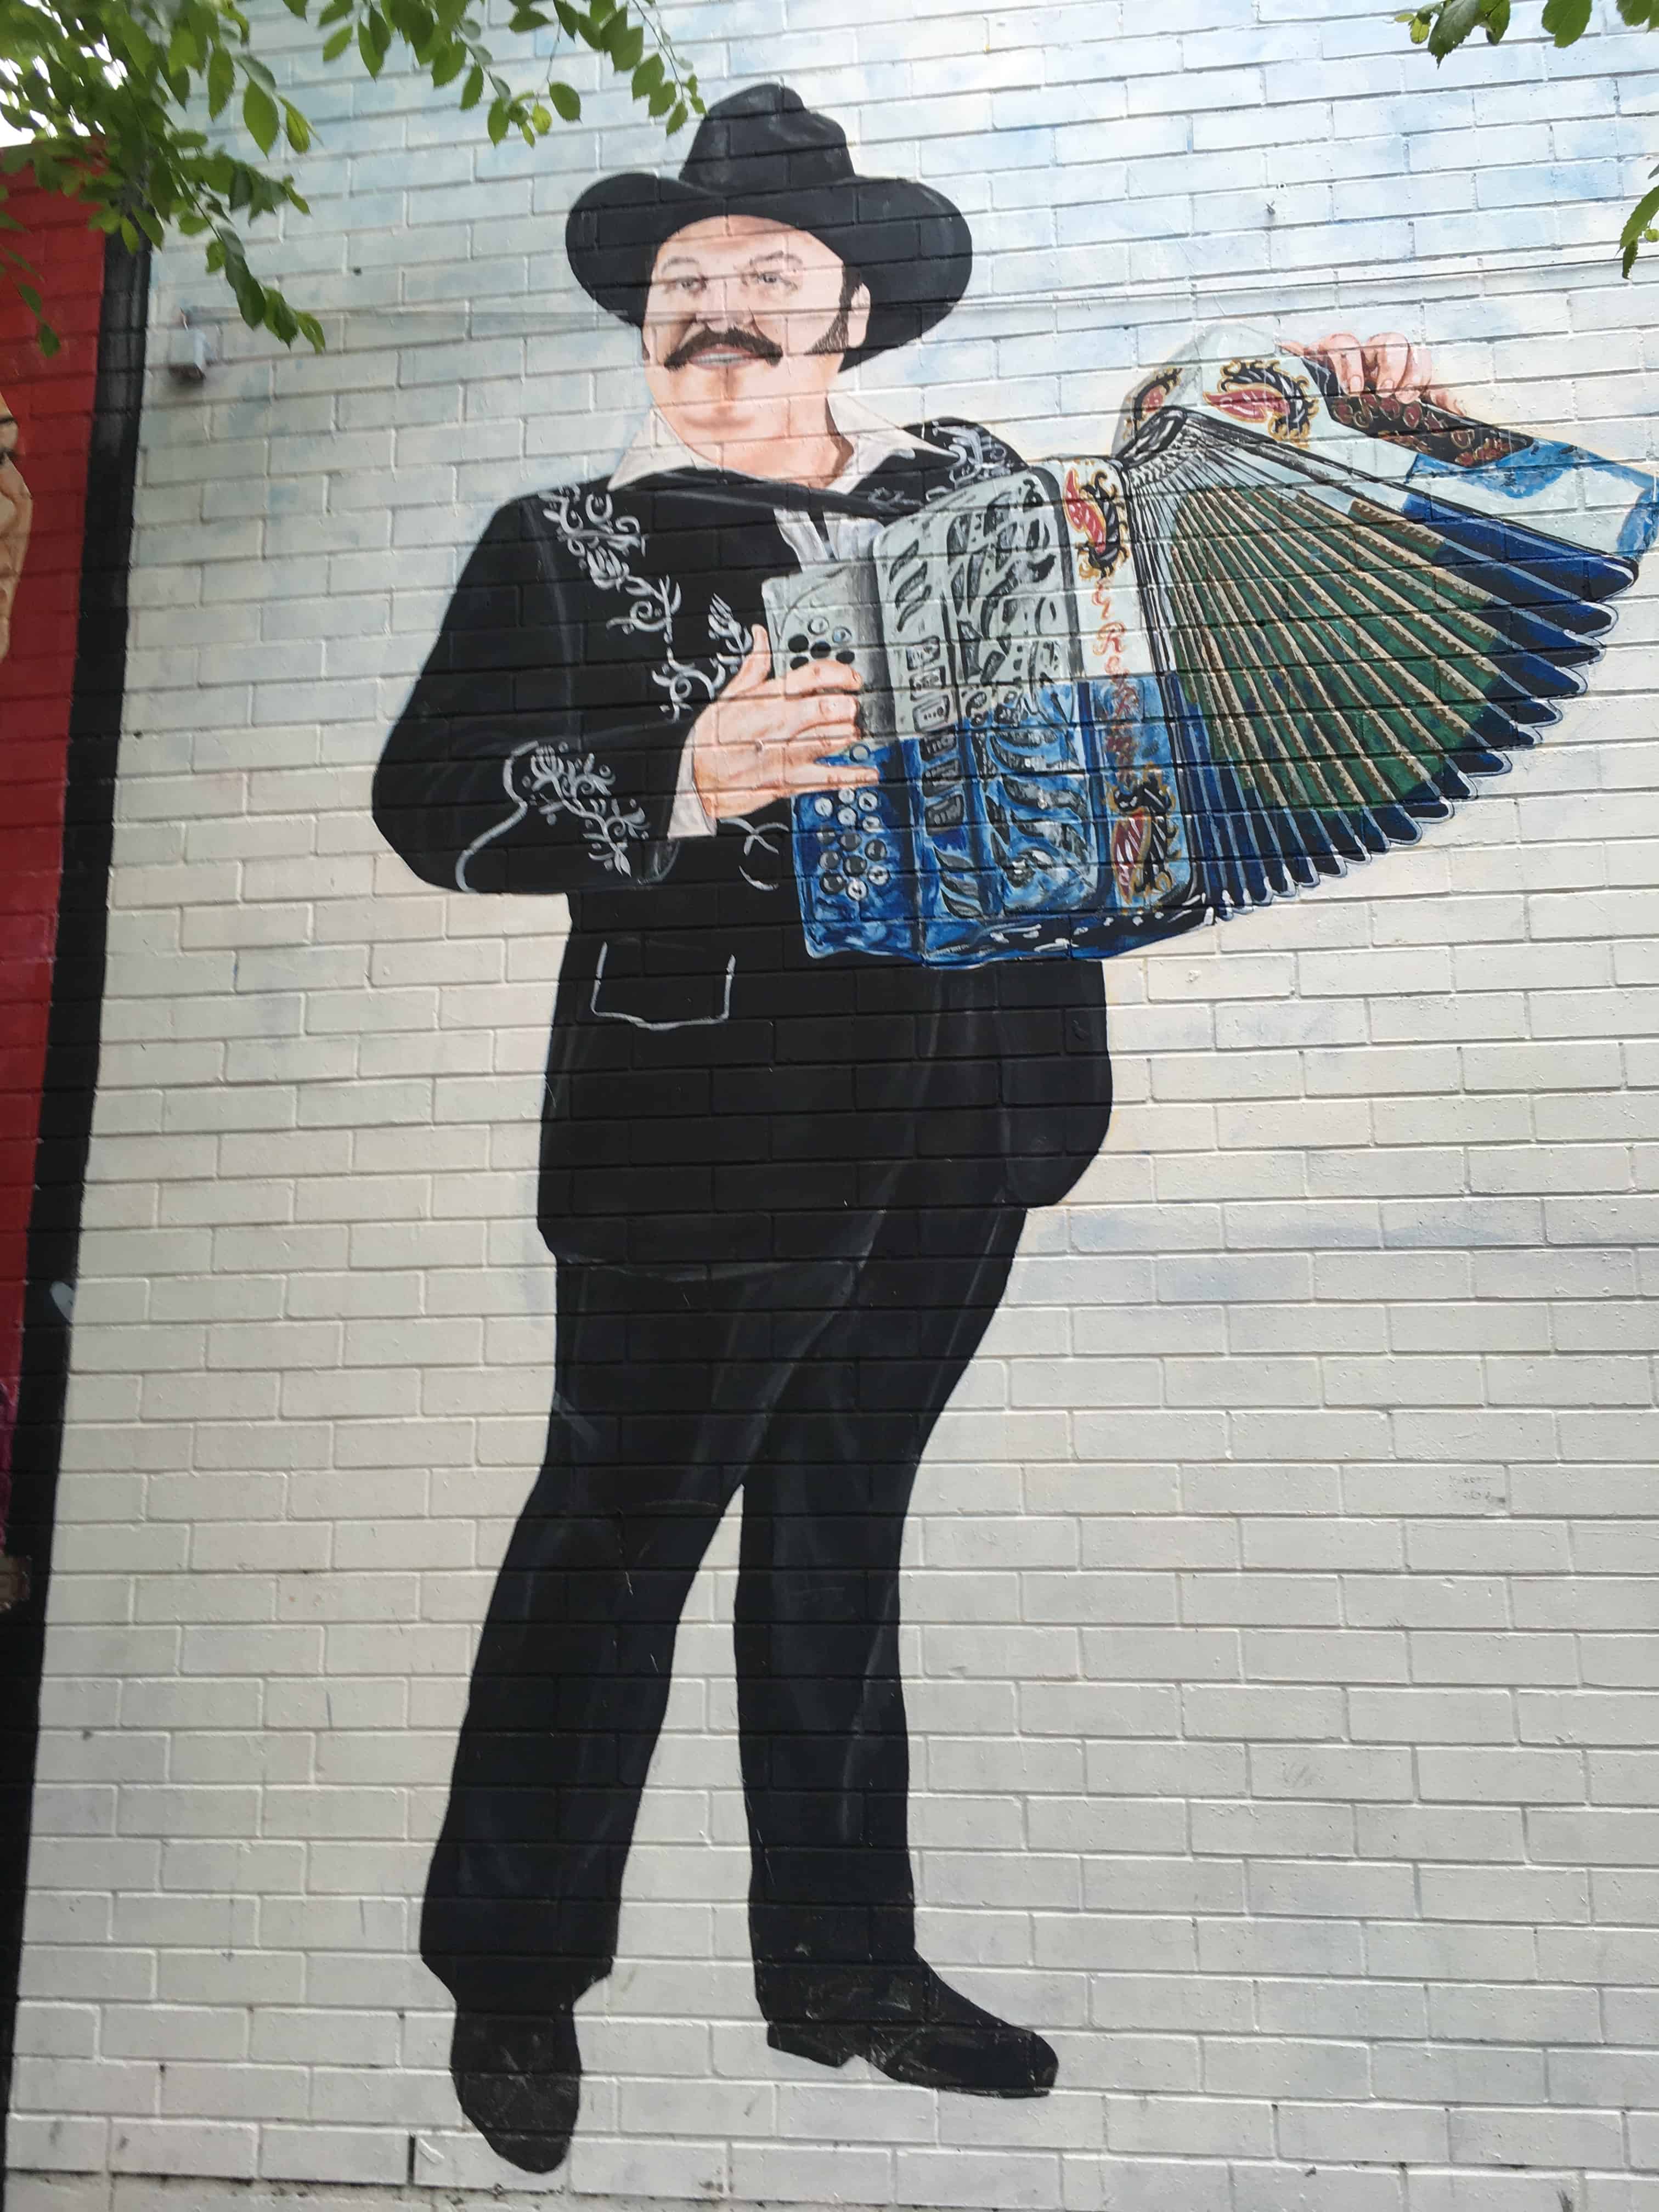 Man playing an accordion at 18th and Wood